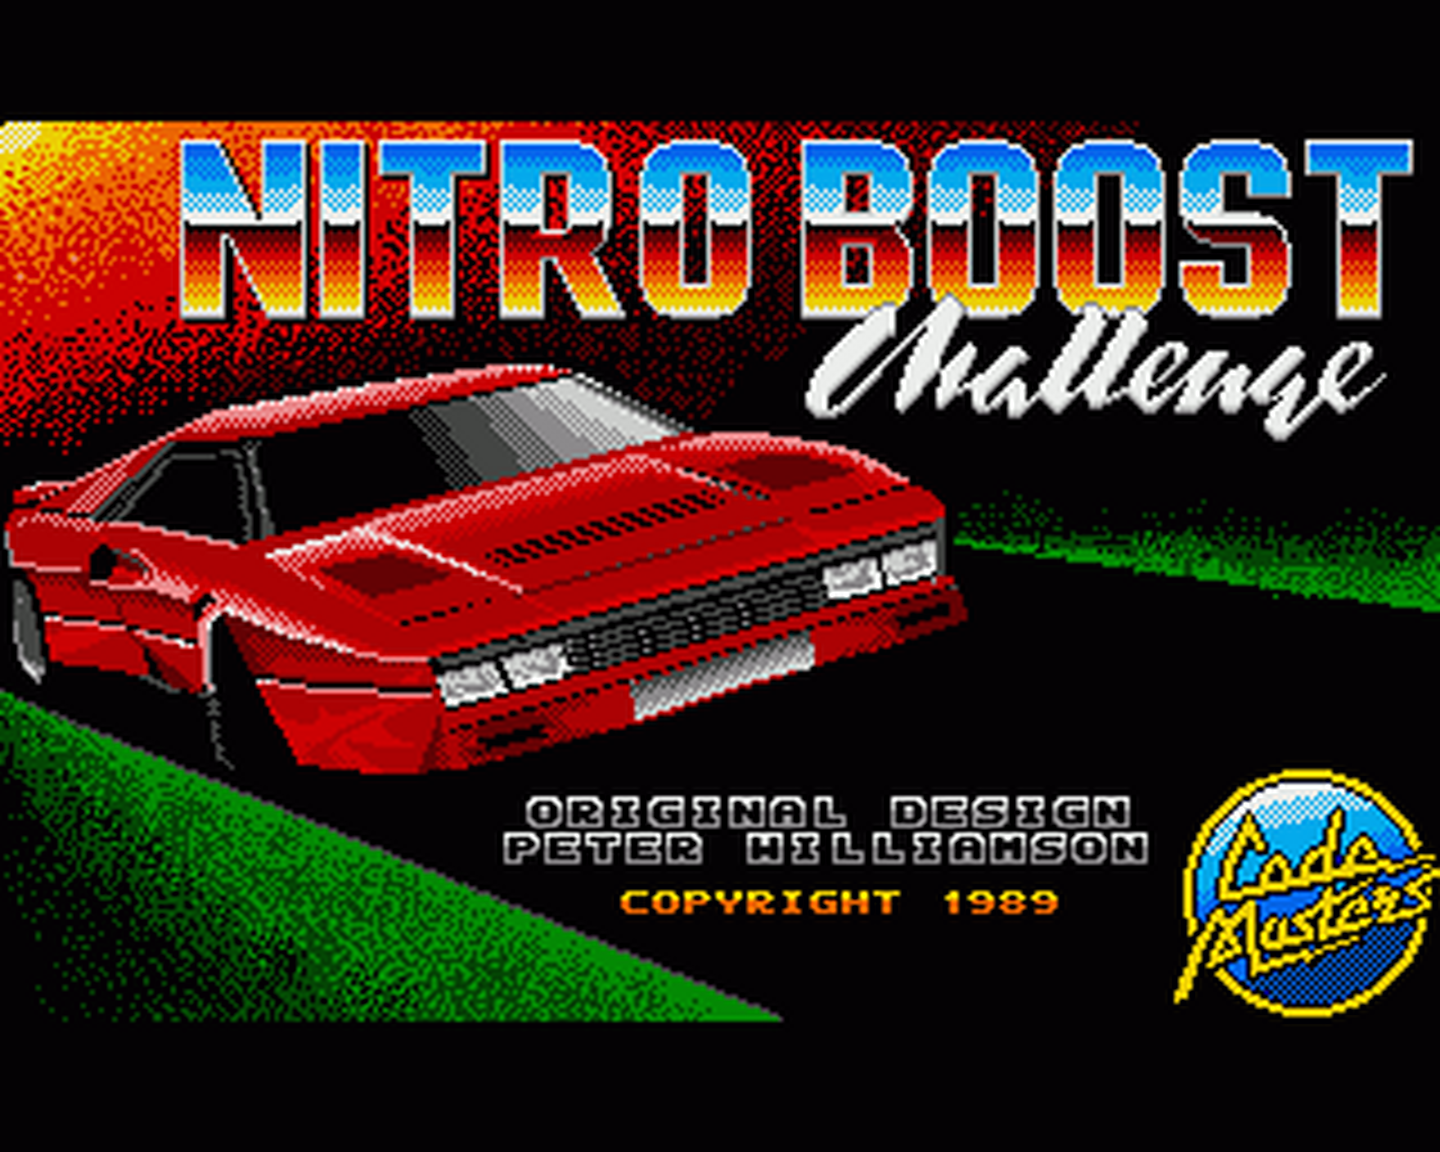 Amiga GameBase Nitro_Boost_Challenge Codemasters 1989